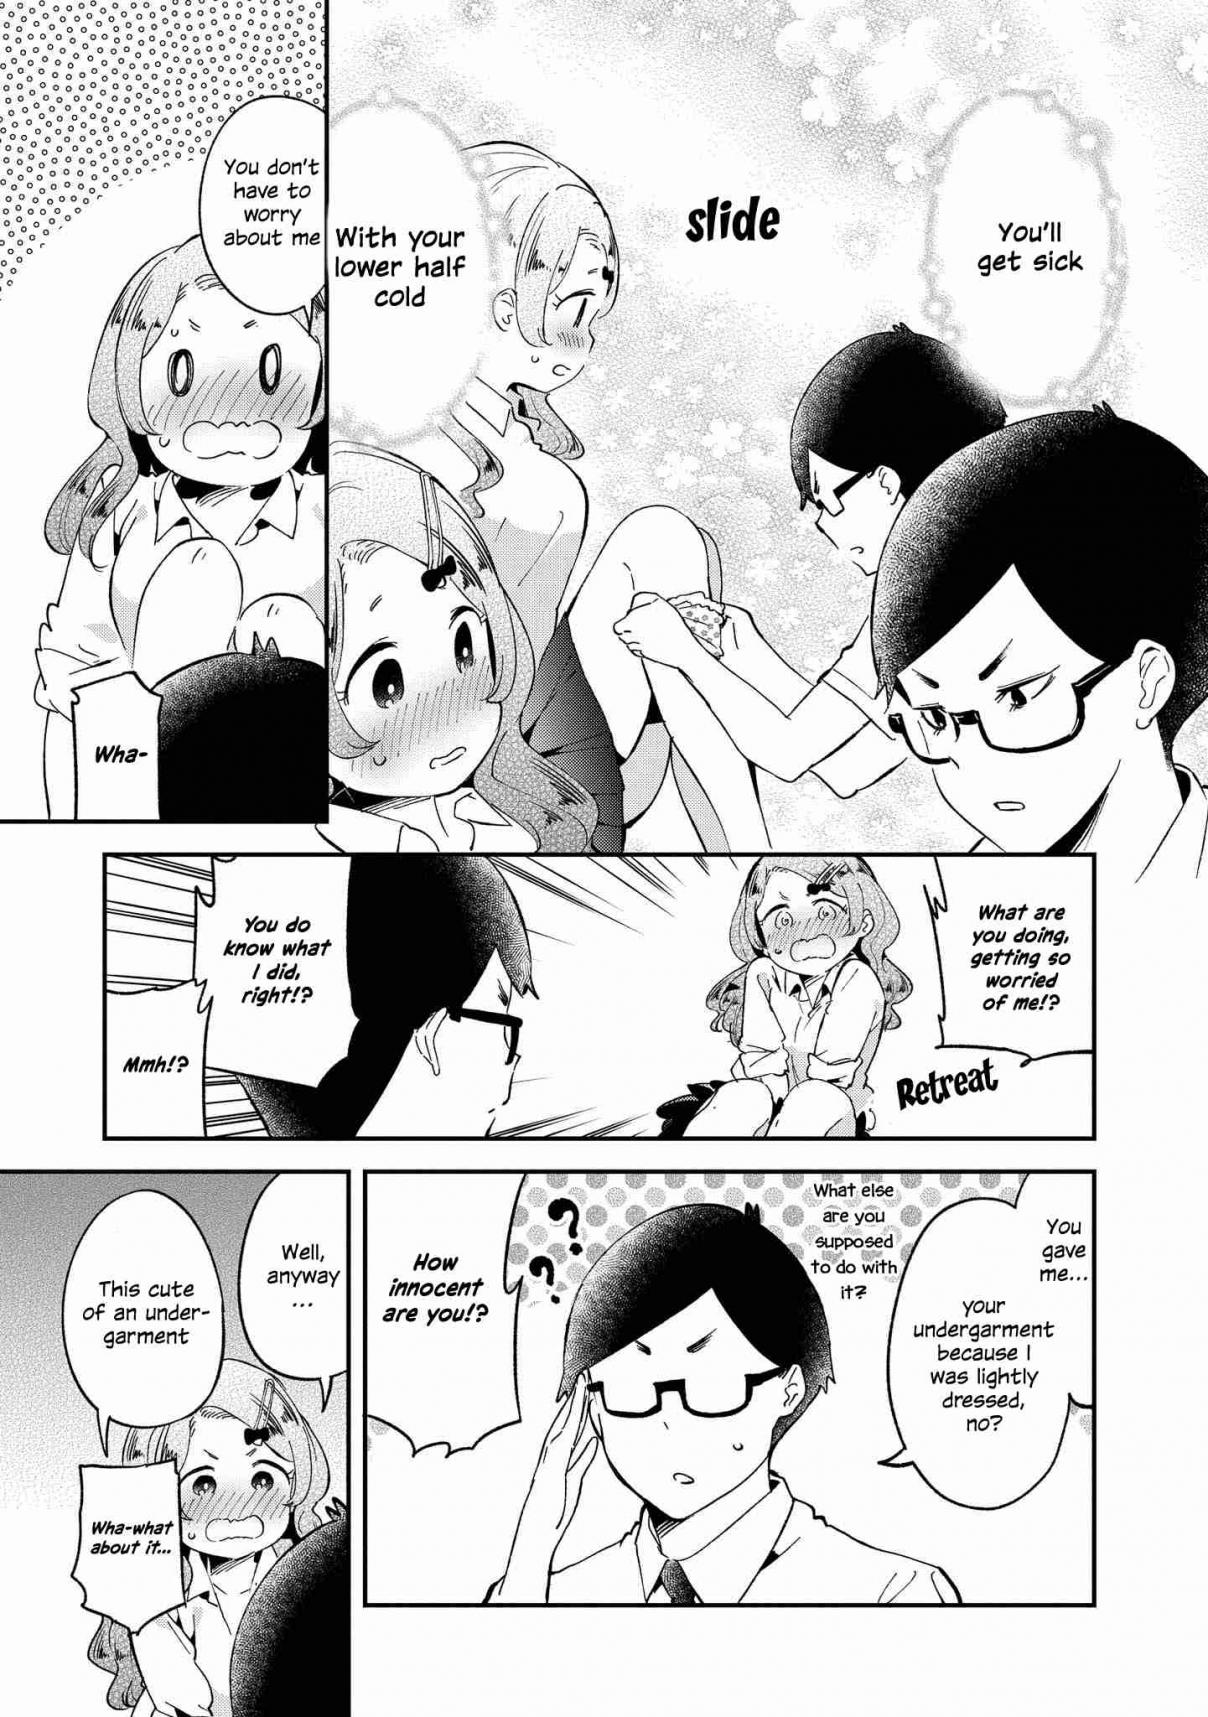 Precious 4p Short Stories Ch. 20 Mamimi Always Fails at Teasing! [by Mizu Asato]